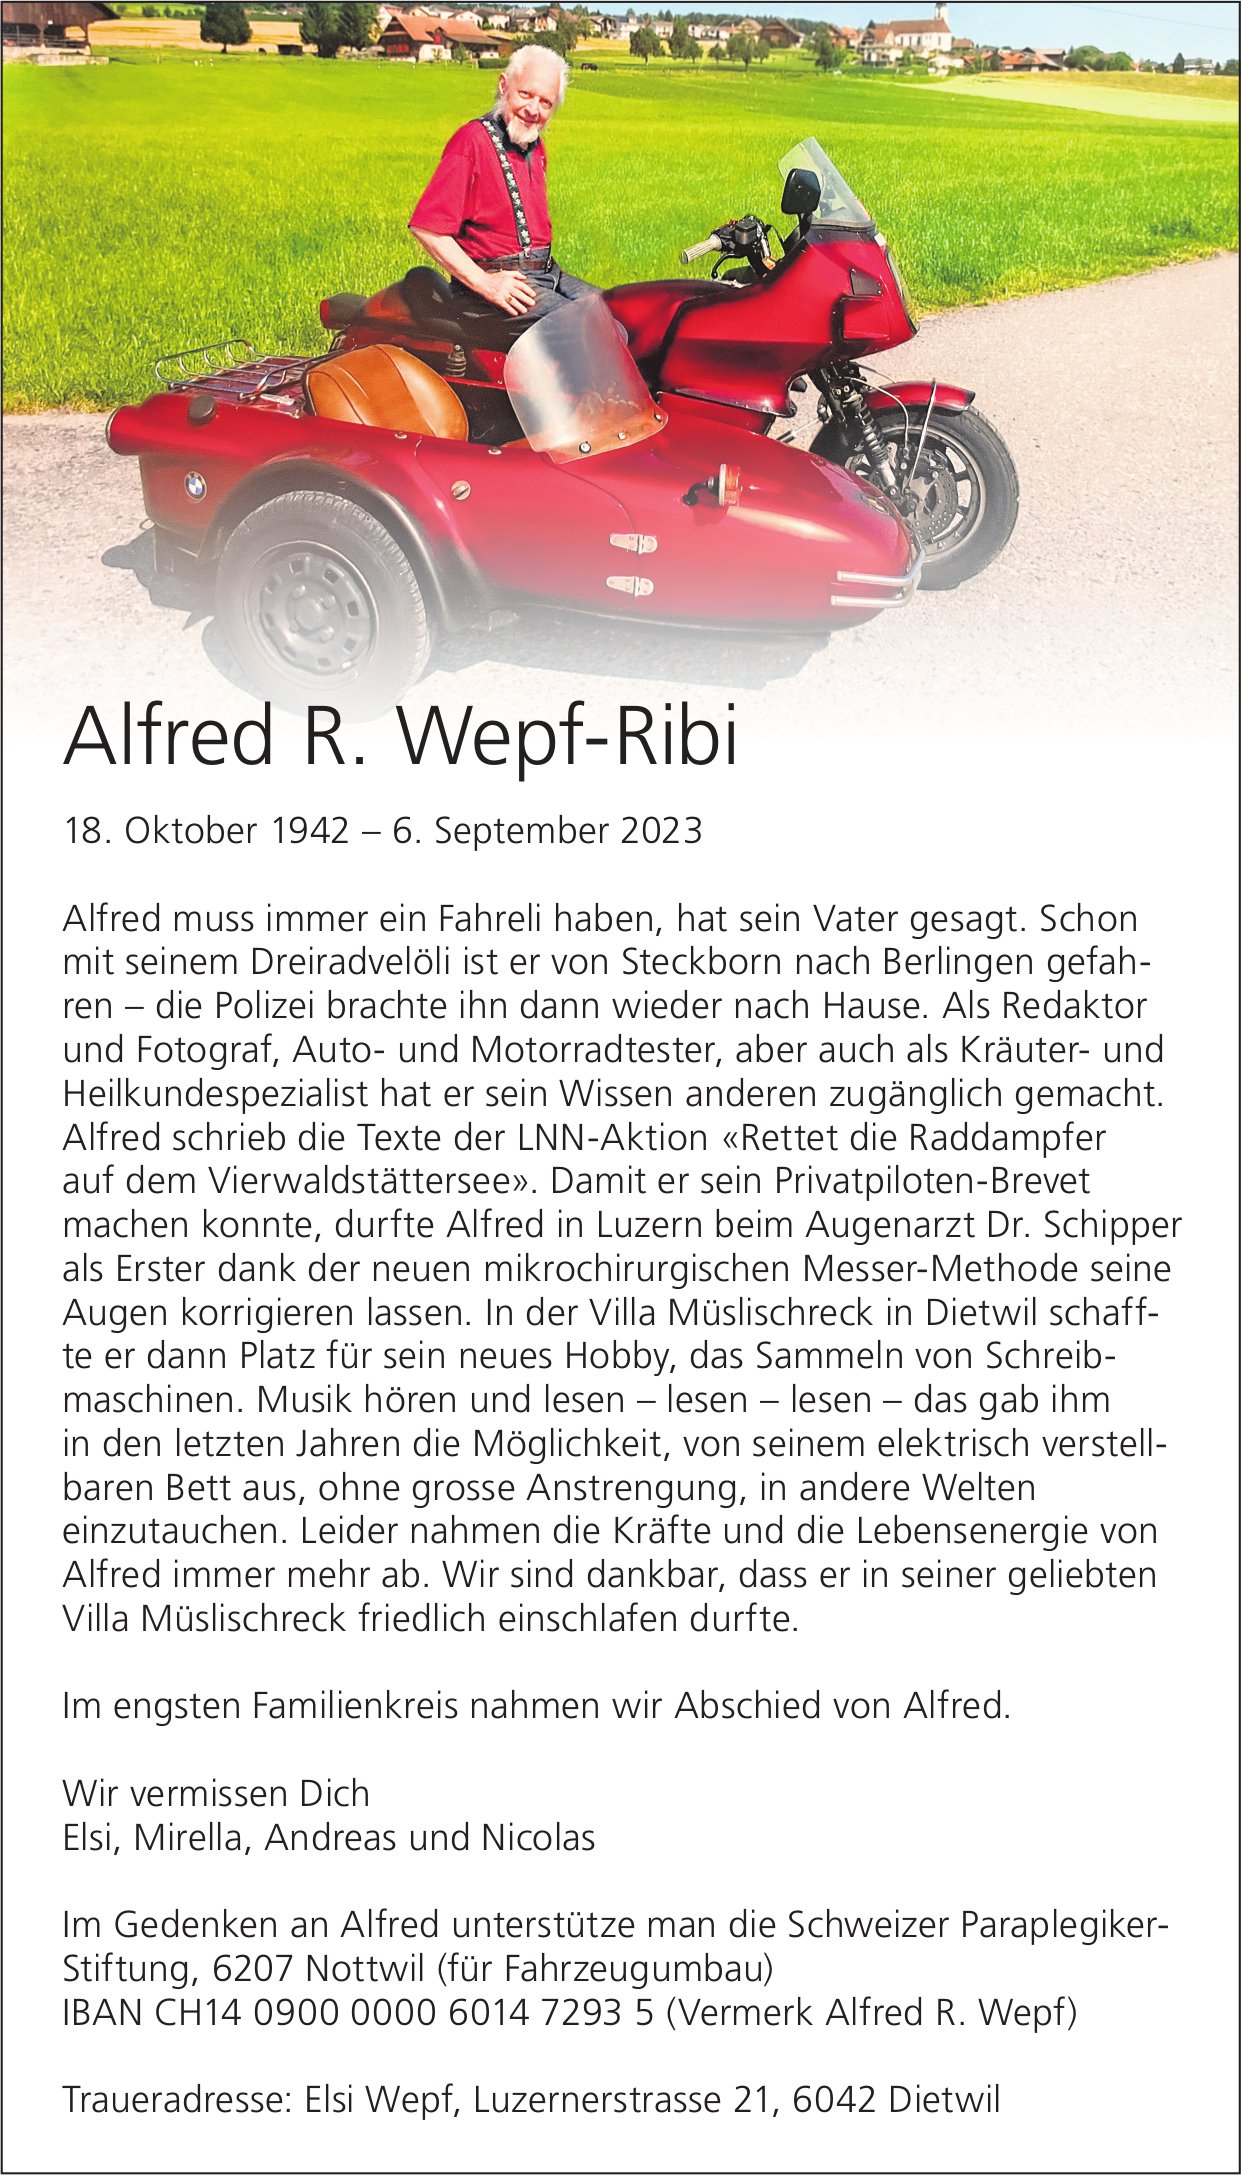 Wepf-Ribi Alfred R., September 2023 / TA